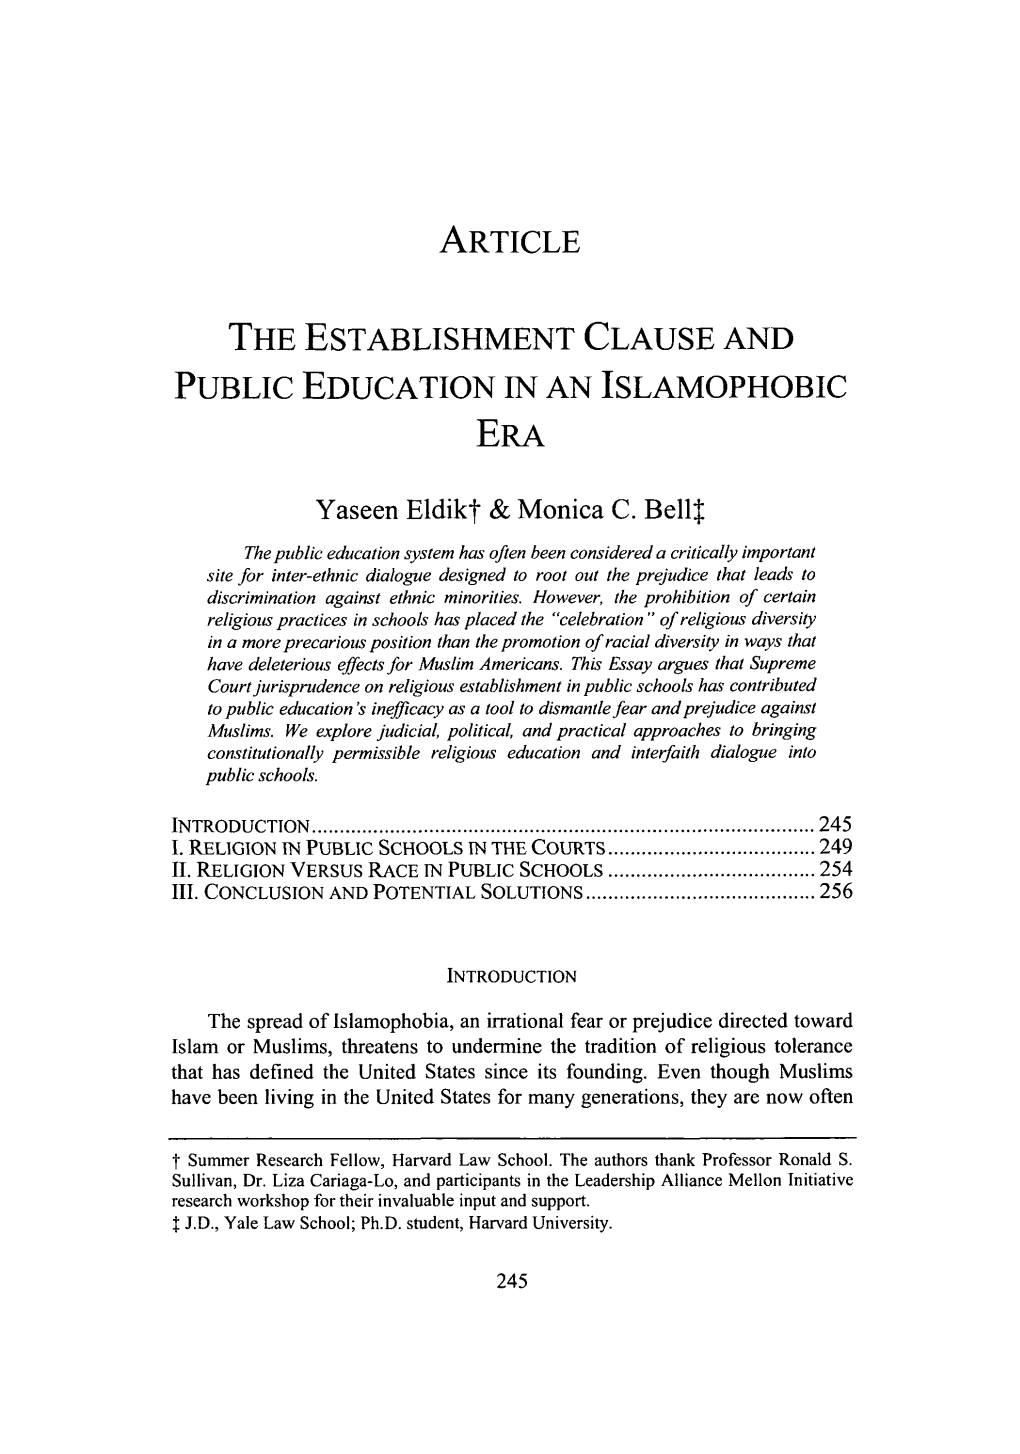 The Establishment Clause and Public Education in an Islamophobic Era